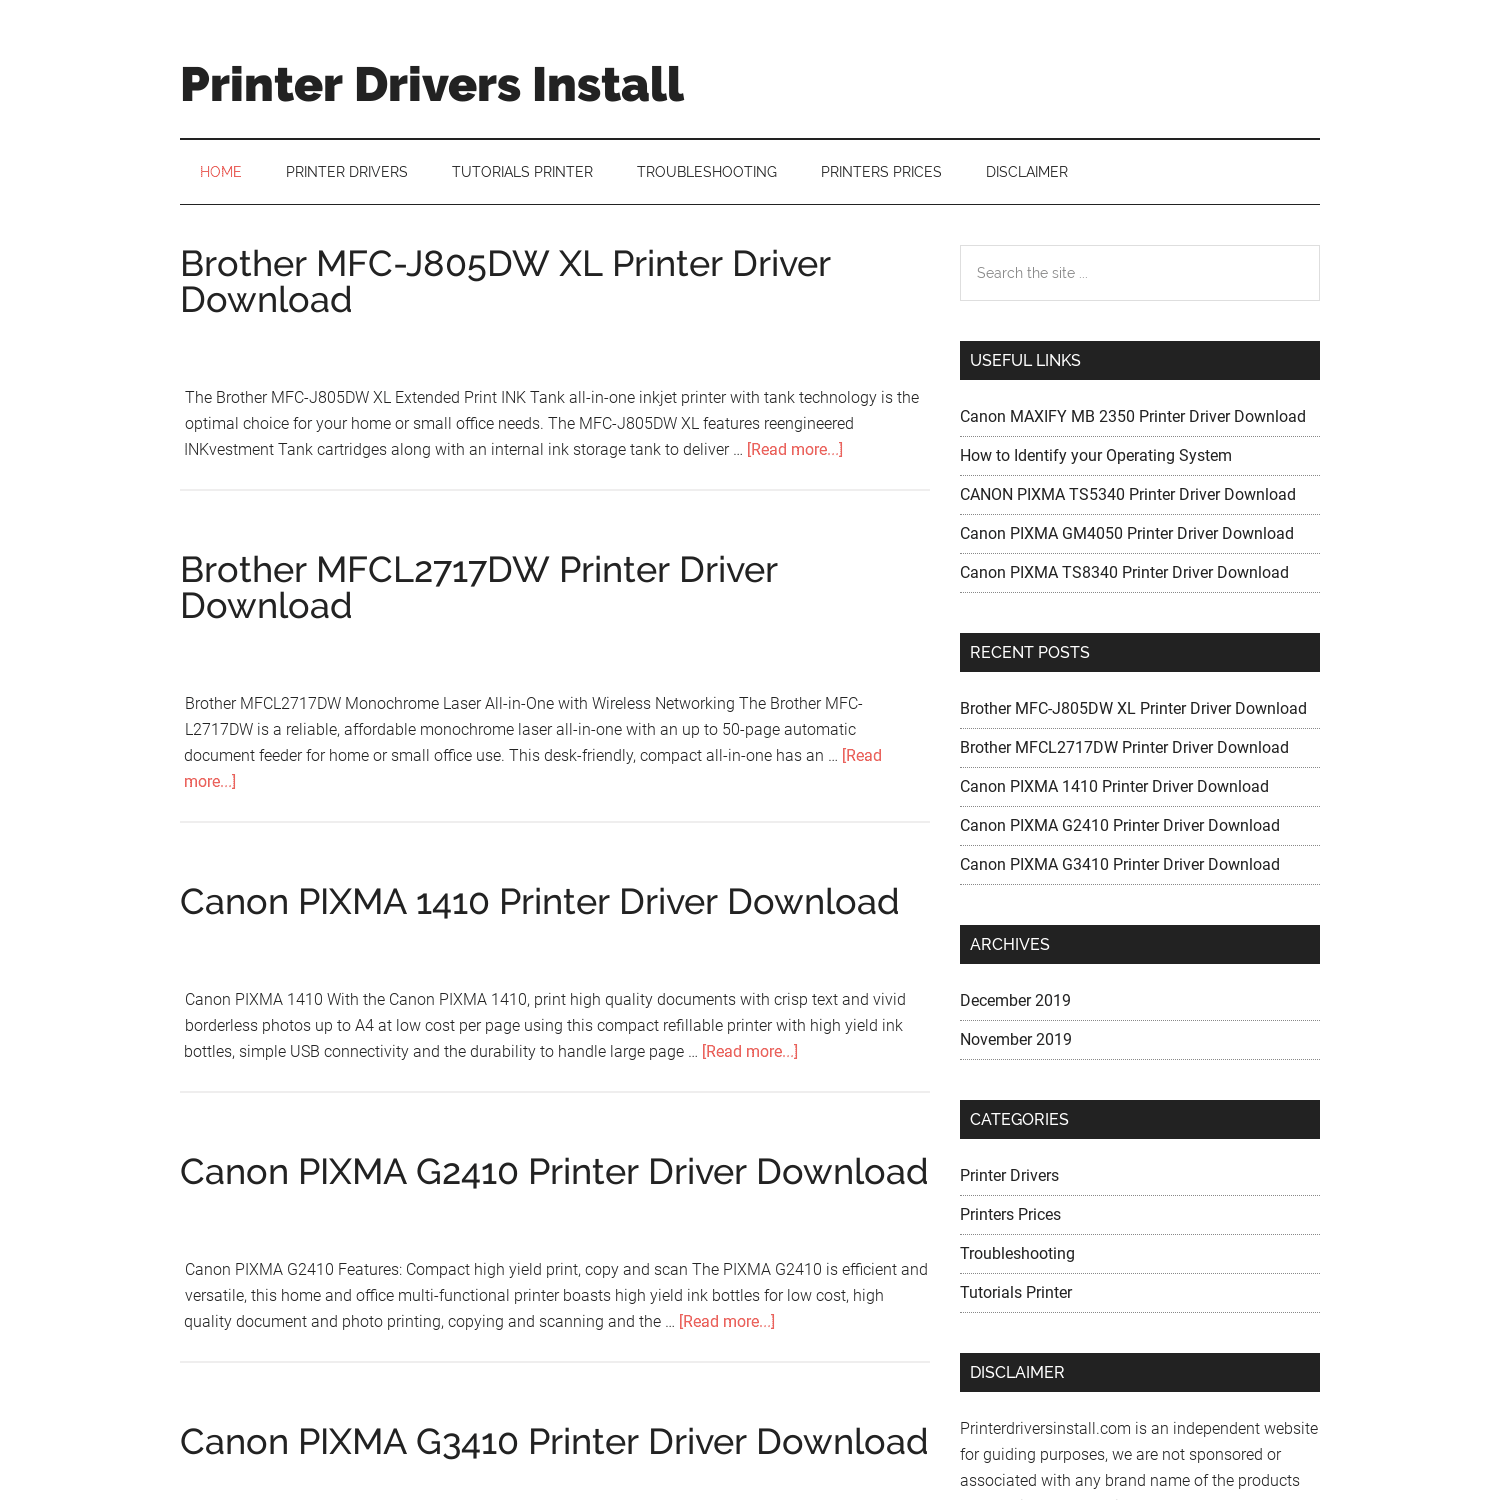 Printer Drivers Install